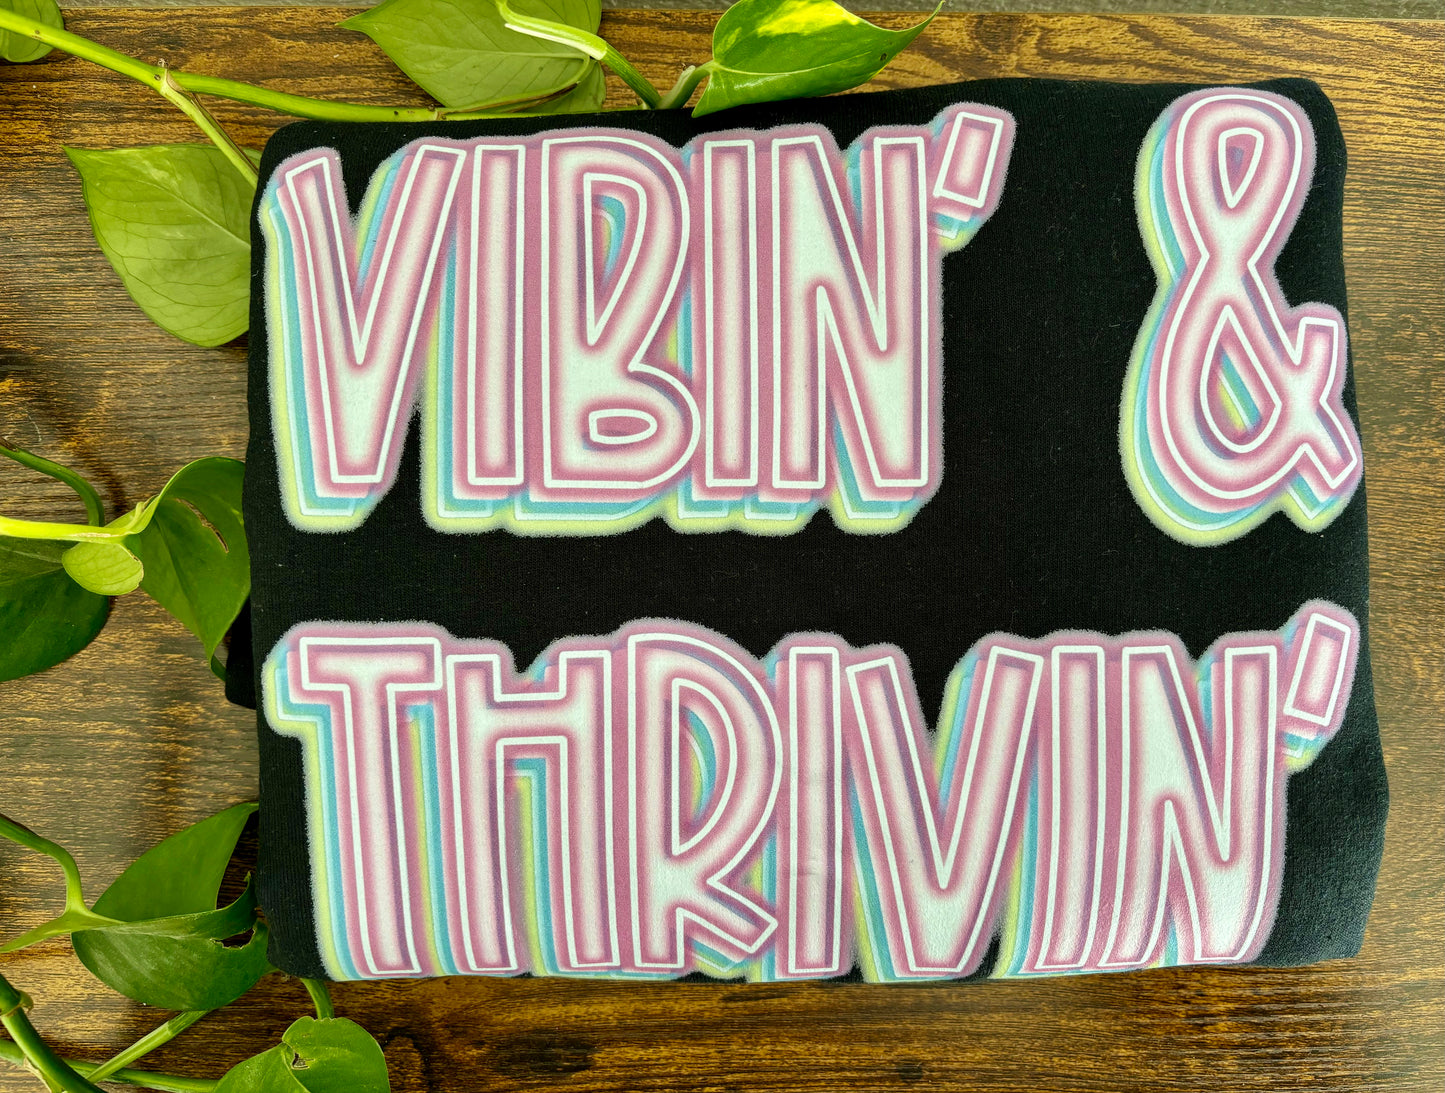 Vibin’ & Thrivin’ Graphic Sweatshirt